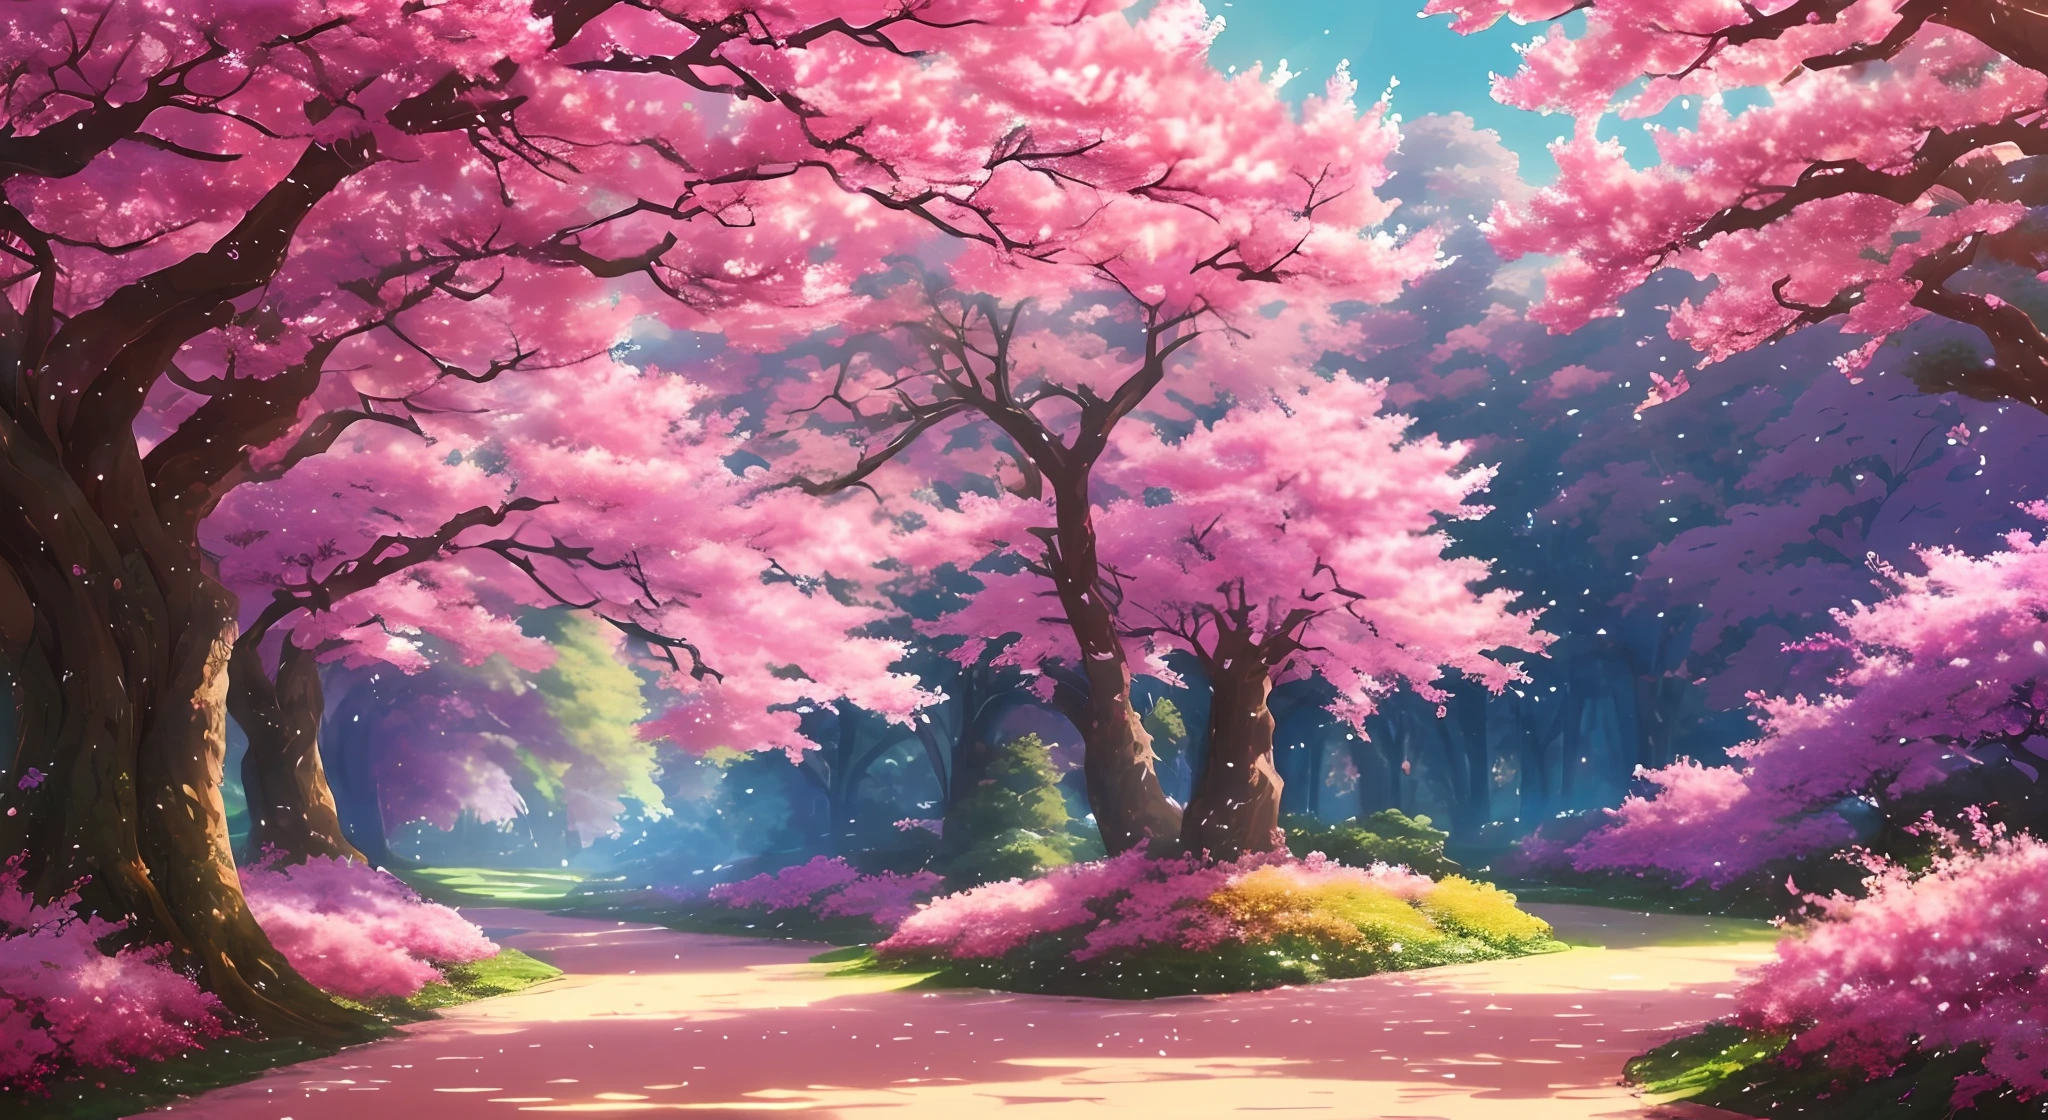 SiM - UNDER THE TREE (Full Length Ver.) Anime Special Ver. - YouTube